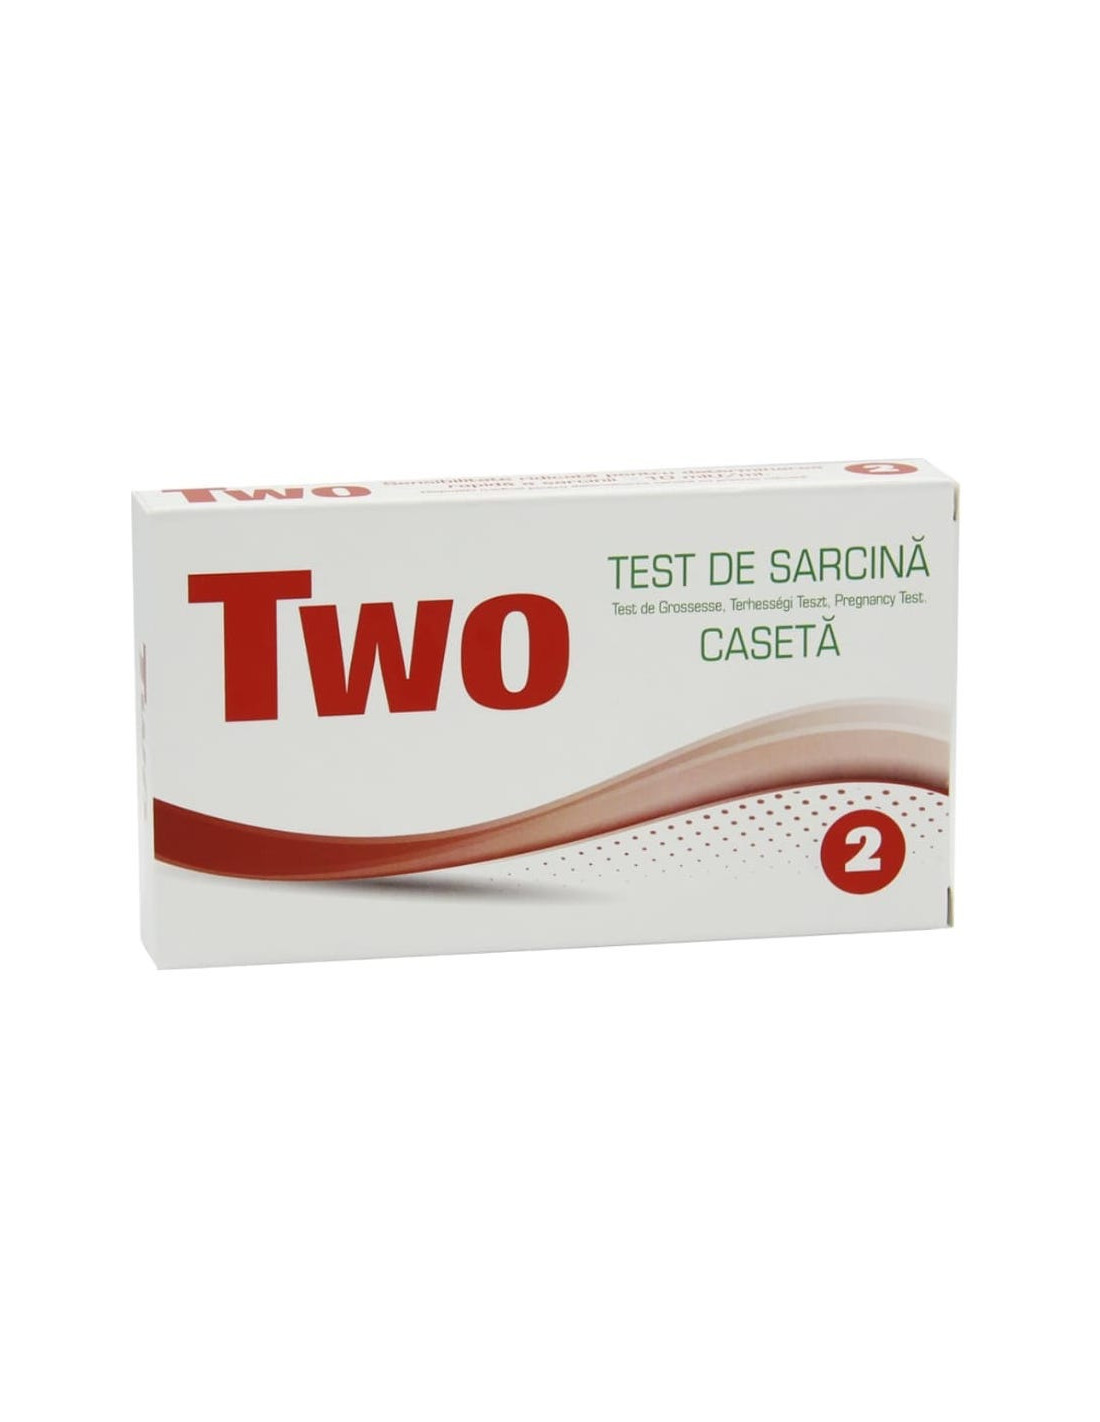 Test de Sarcina Two tip caseta, 2 - TESTE-SARCINA - HUBEI